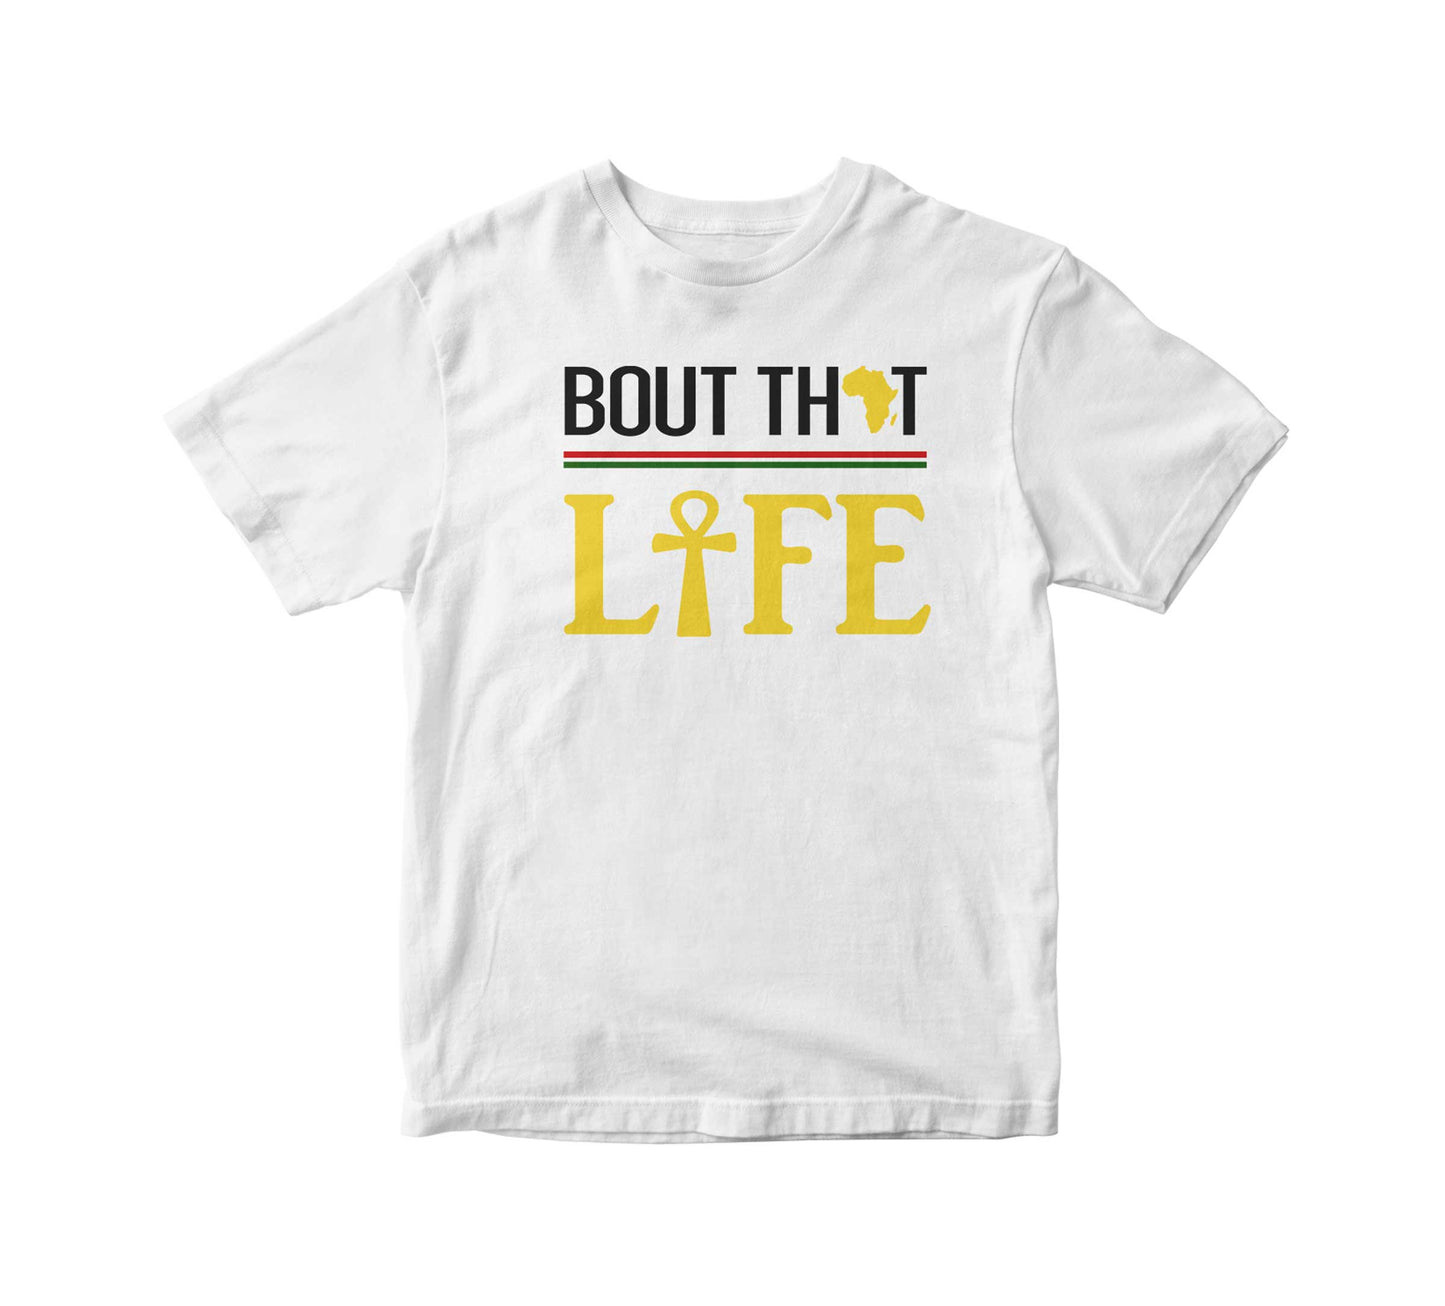 Bout That Life! Kids Unisex T-Shirt